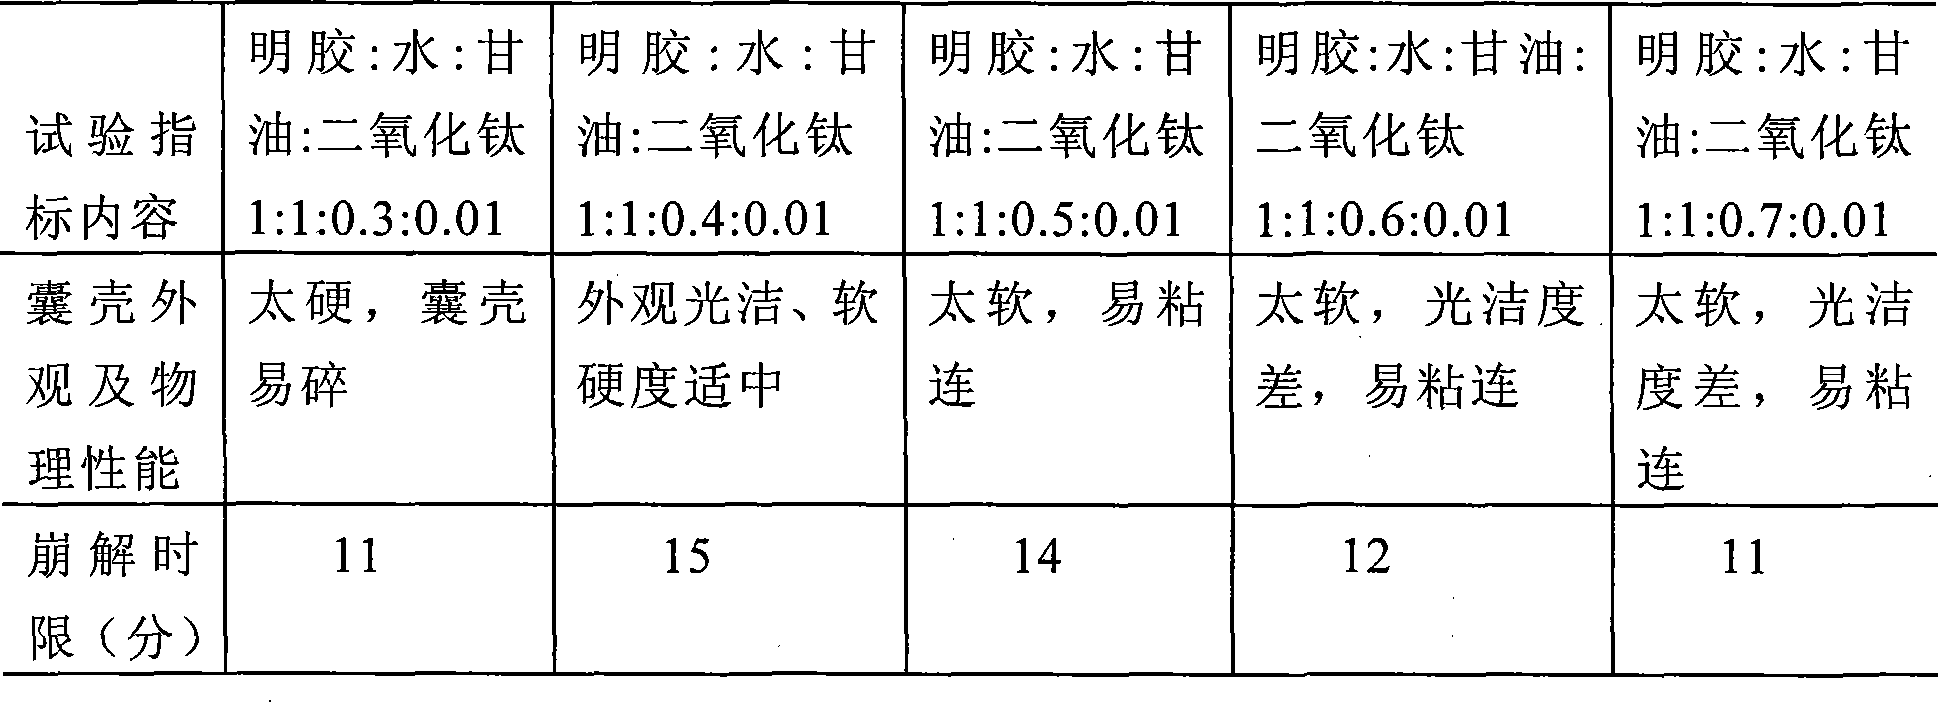 Niuhuangshangqing soft capsule and preparation method thereof